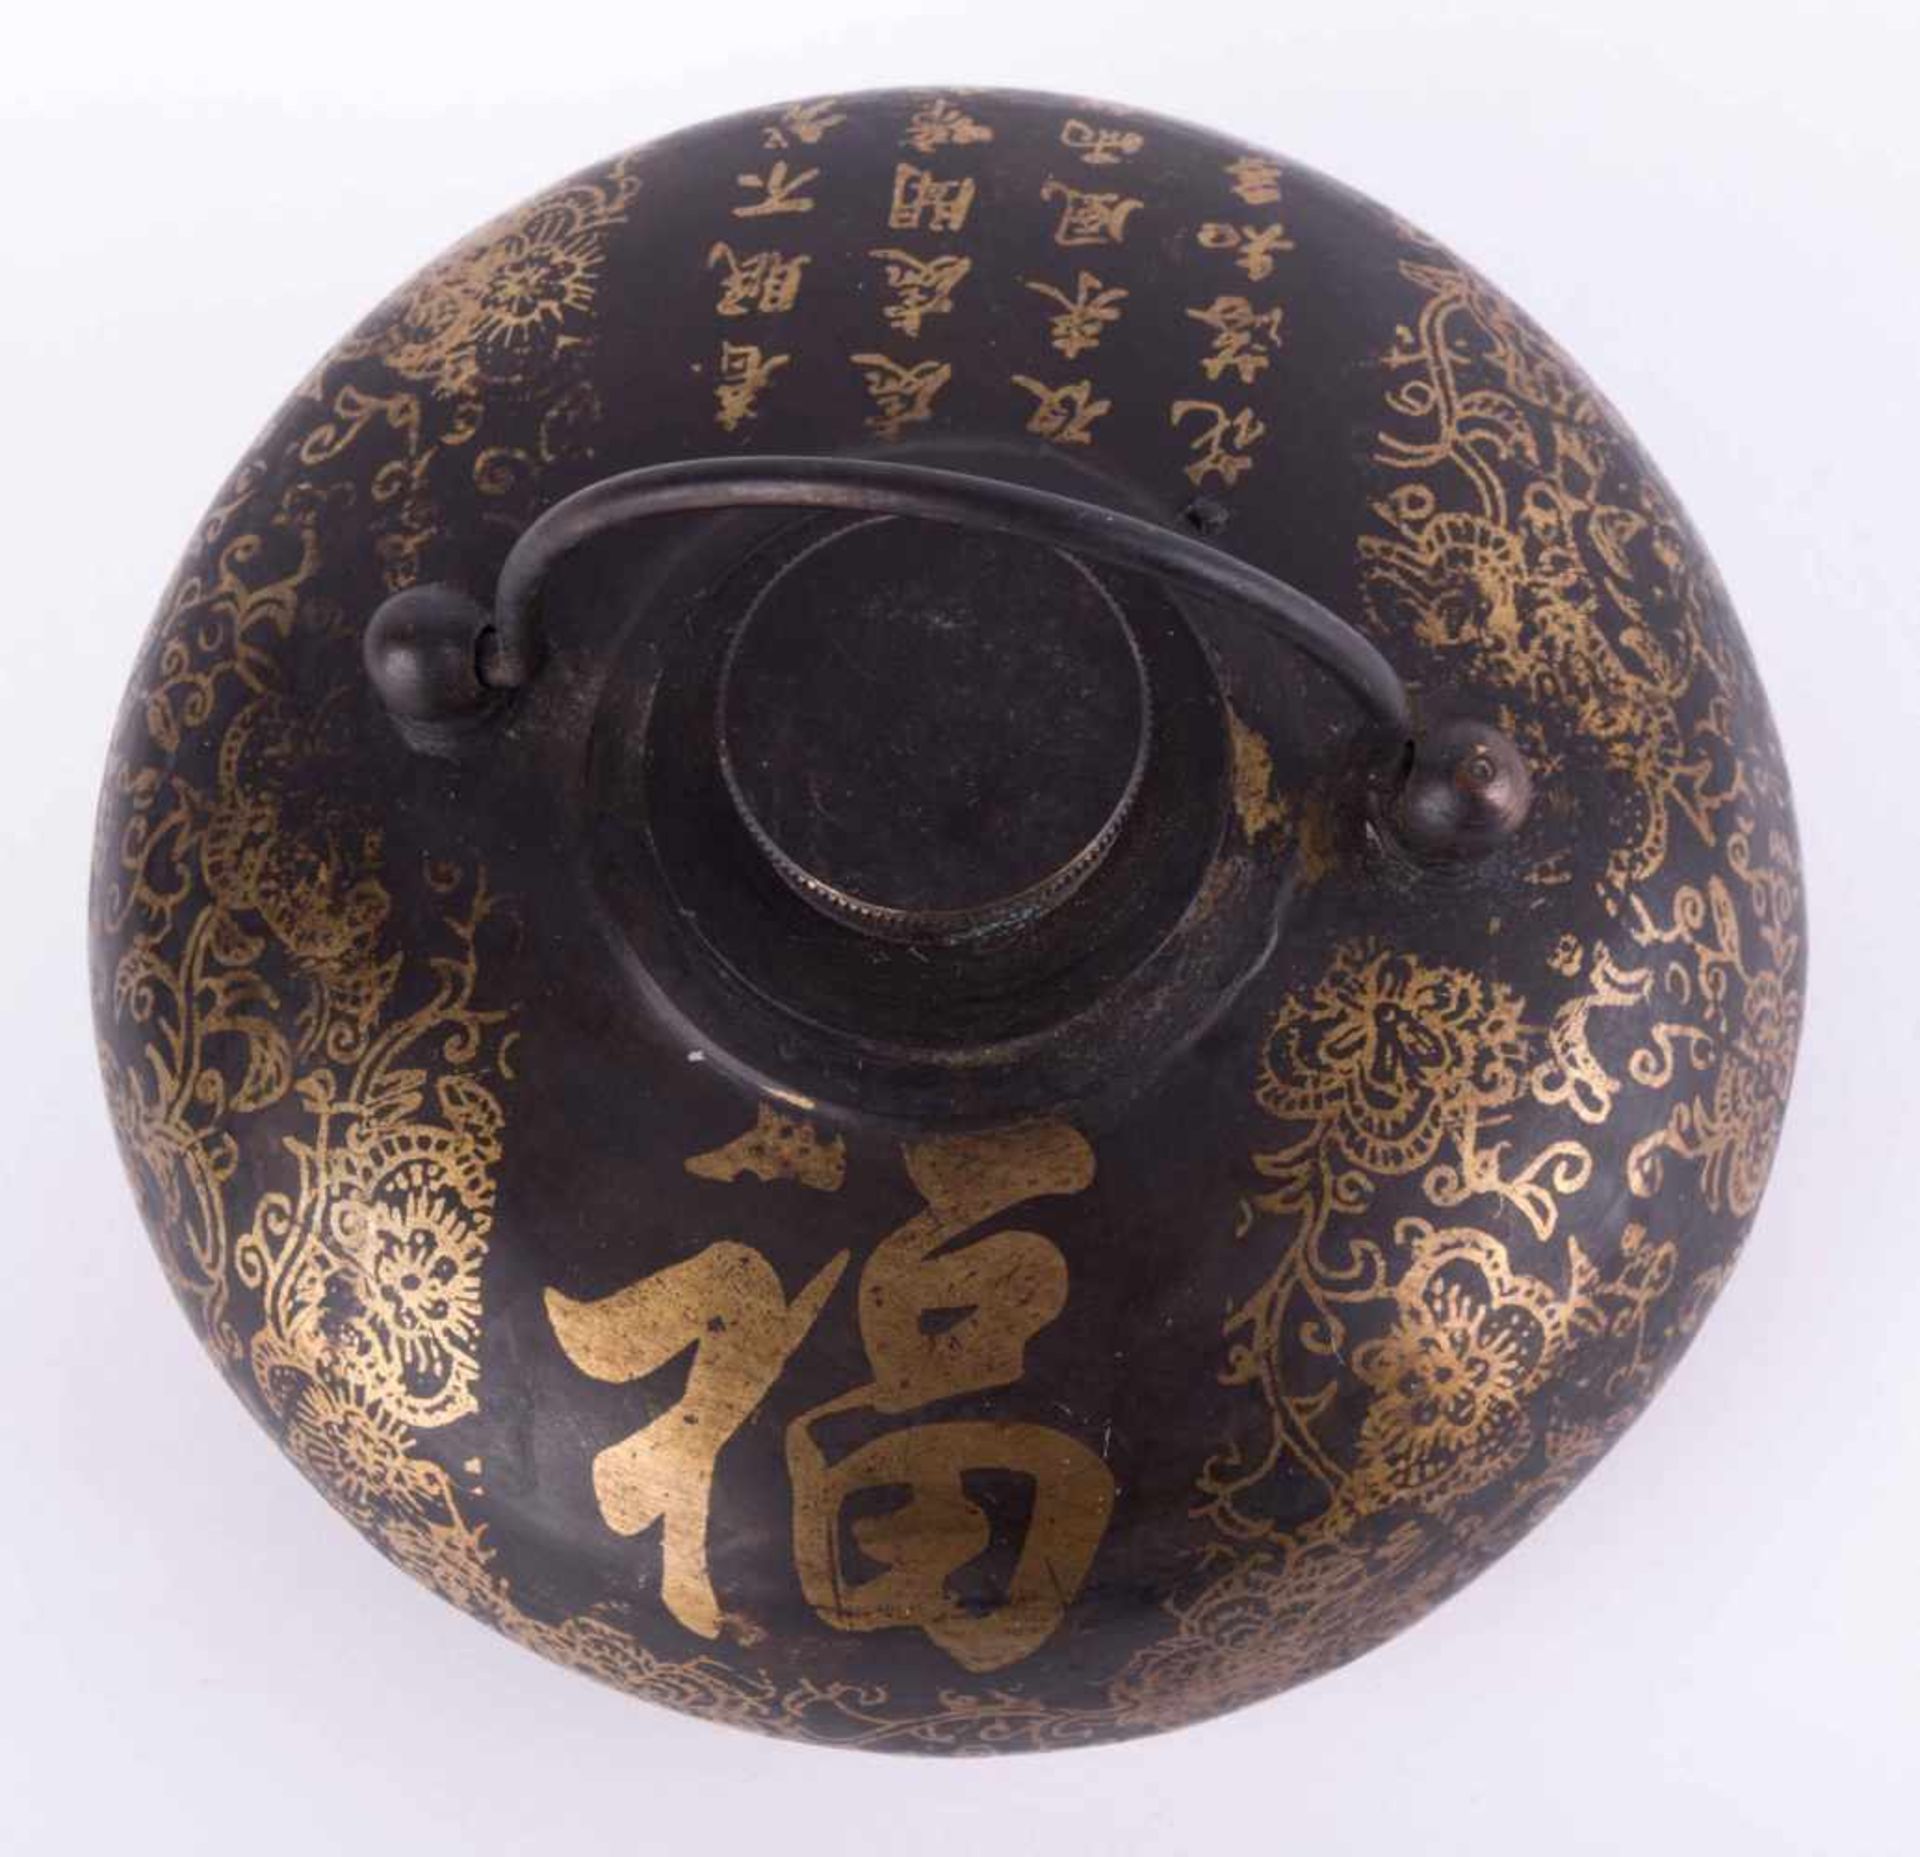 Wärmflasche China 19. Jhd. / Hot-water bottle, China 19thcentury Bronze, goldstaffiert, unterm Stand - Bild 3 aus 6